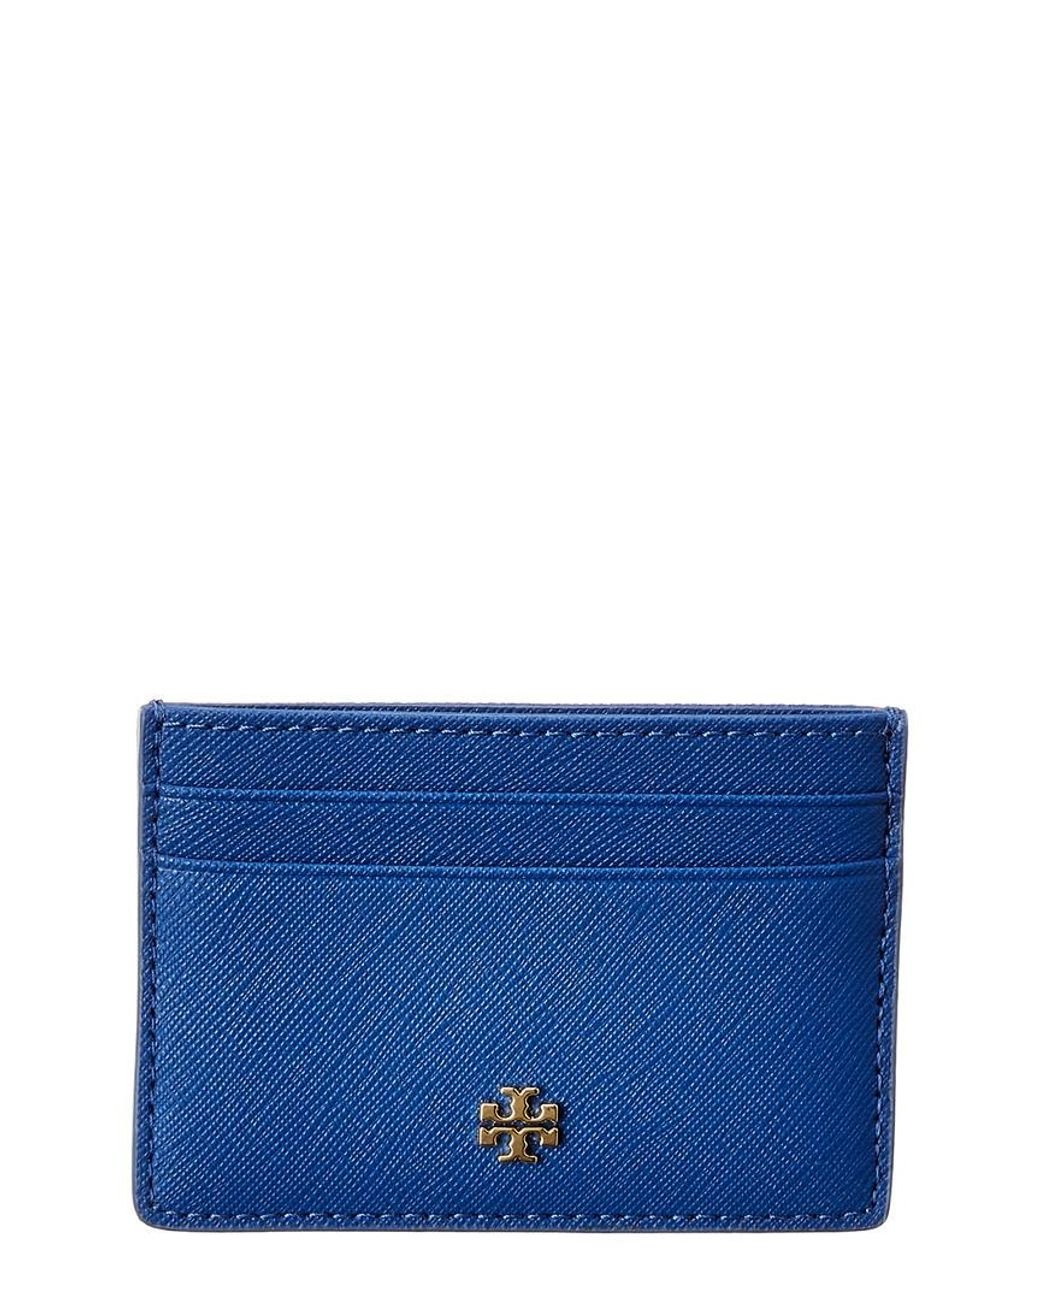 Tory Burch Emerson Slim Leather Card Case in Blue | Lyst